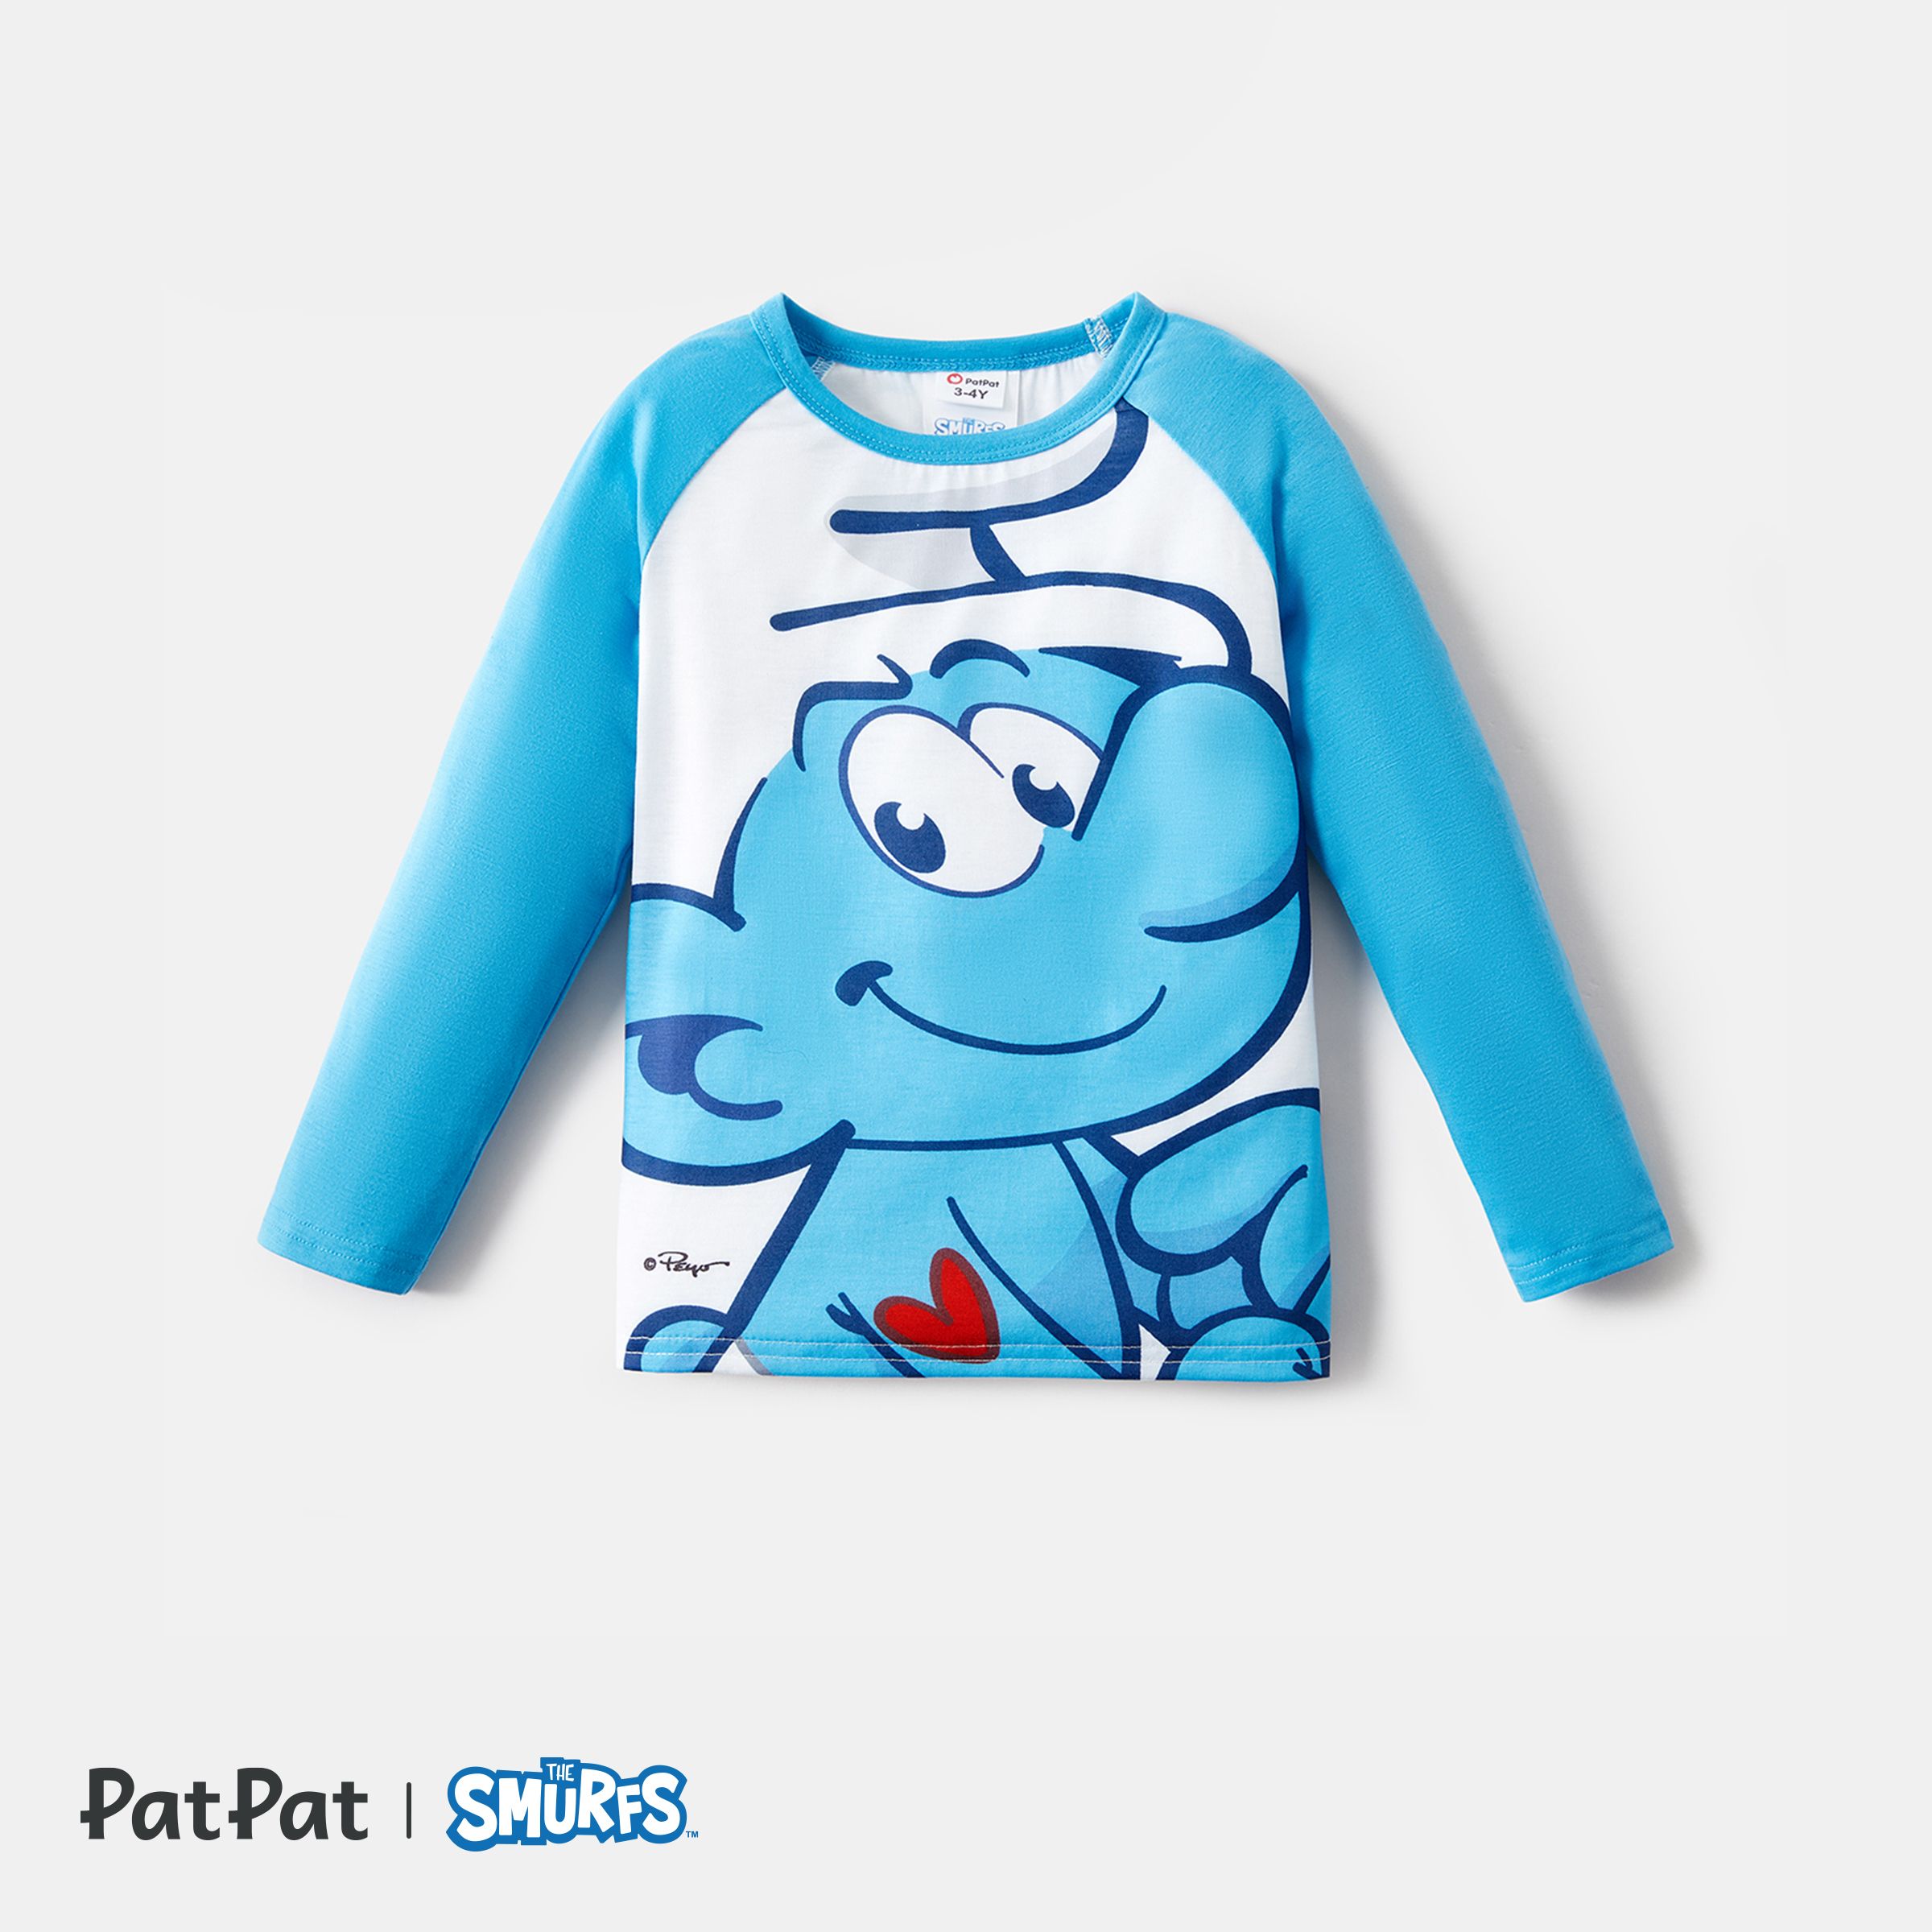 The Smurfs Family Matching Blue Raglan-sleeve Graphic T-shirts